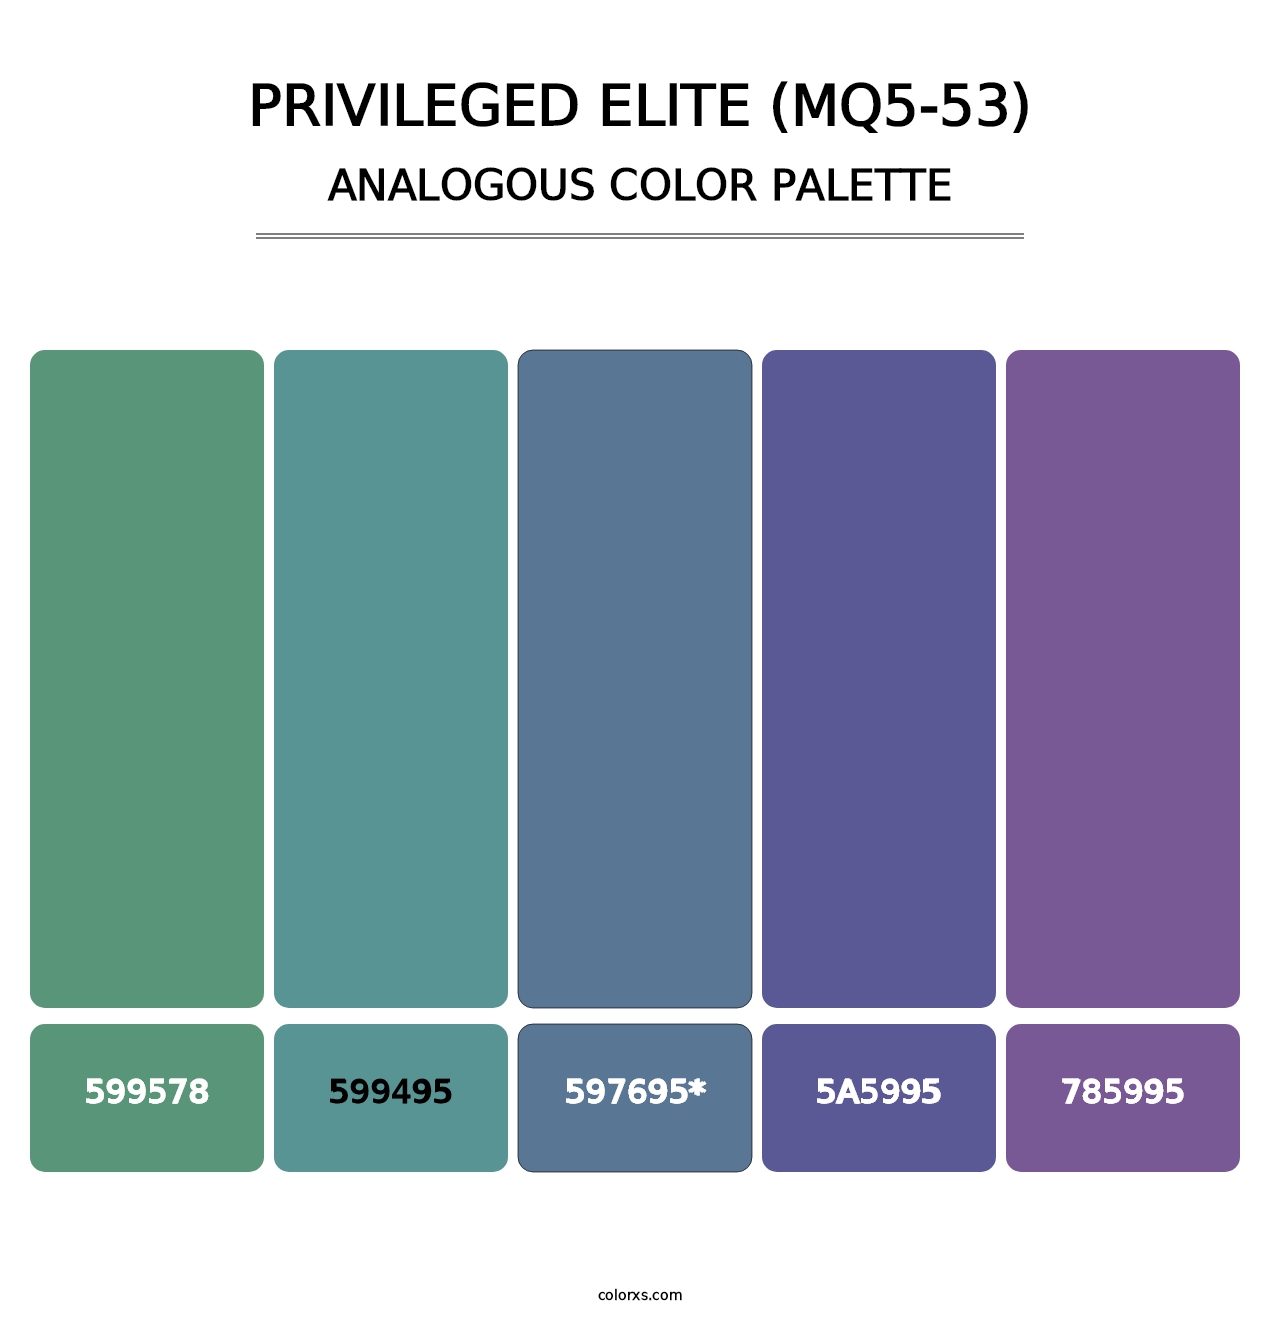 Privileged Elite (MQ5-53) - Analogous Color Palette